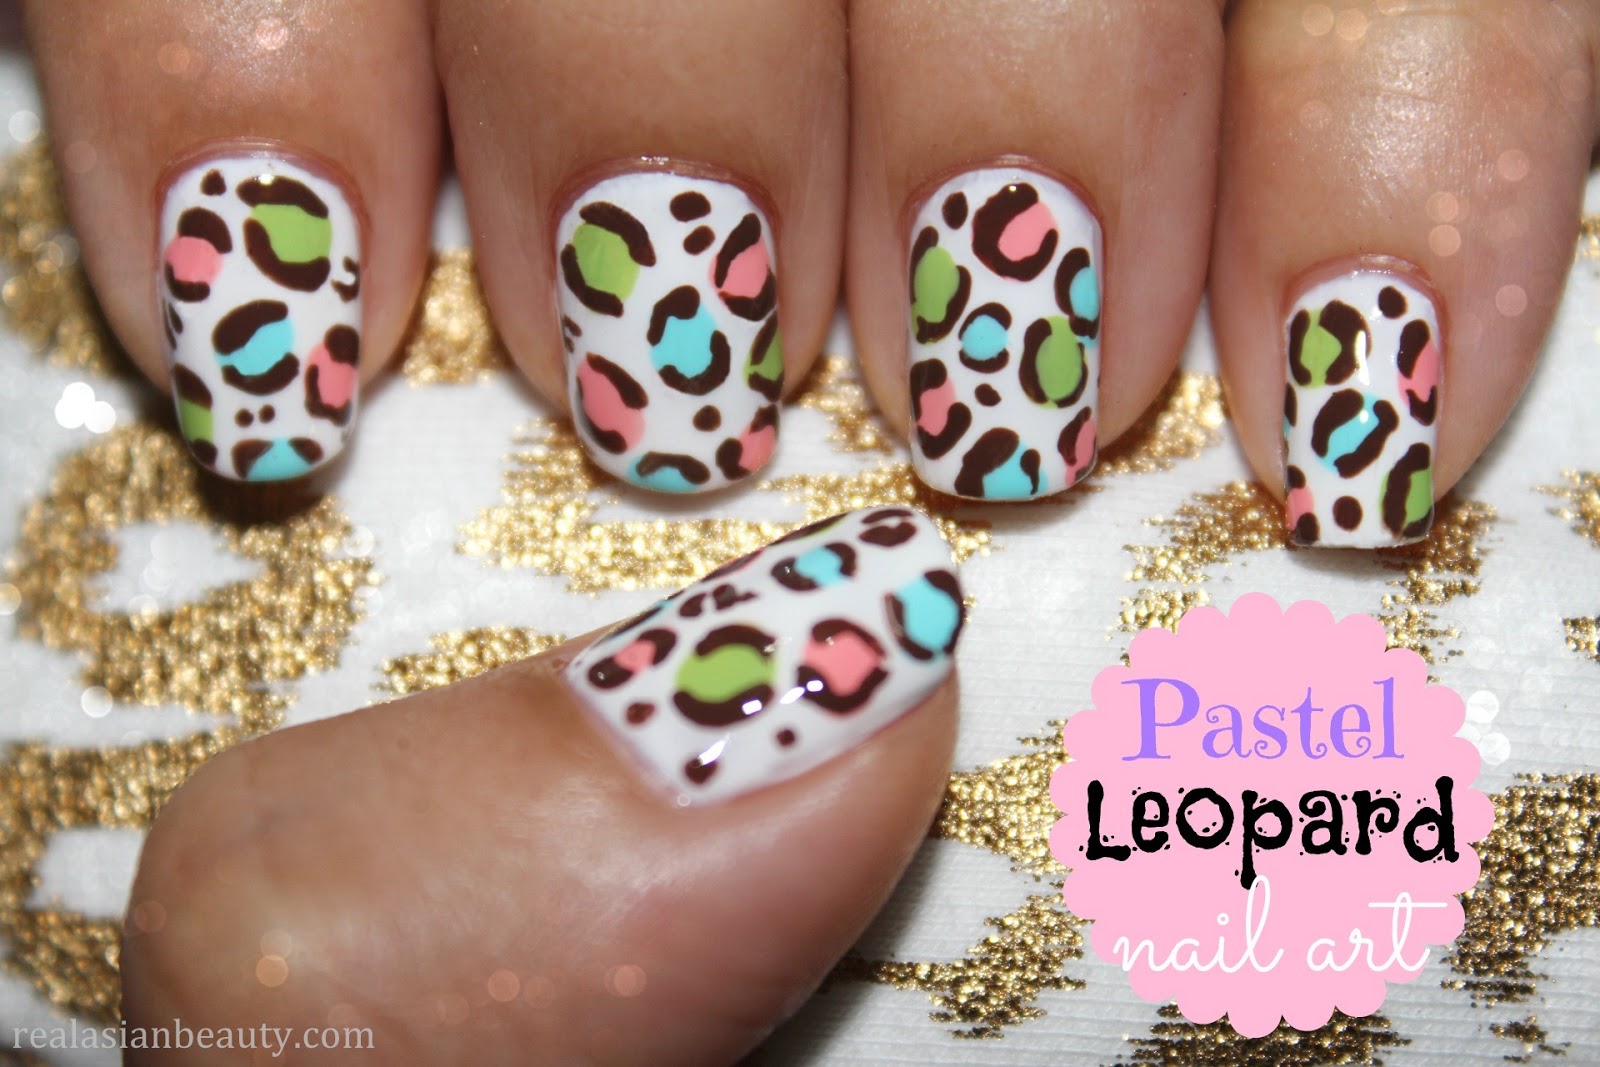 Real Asian Beauty: Pastel Leopard Print Nail Art